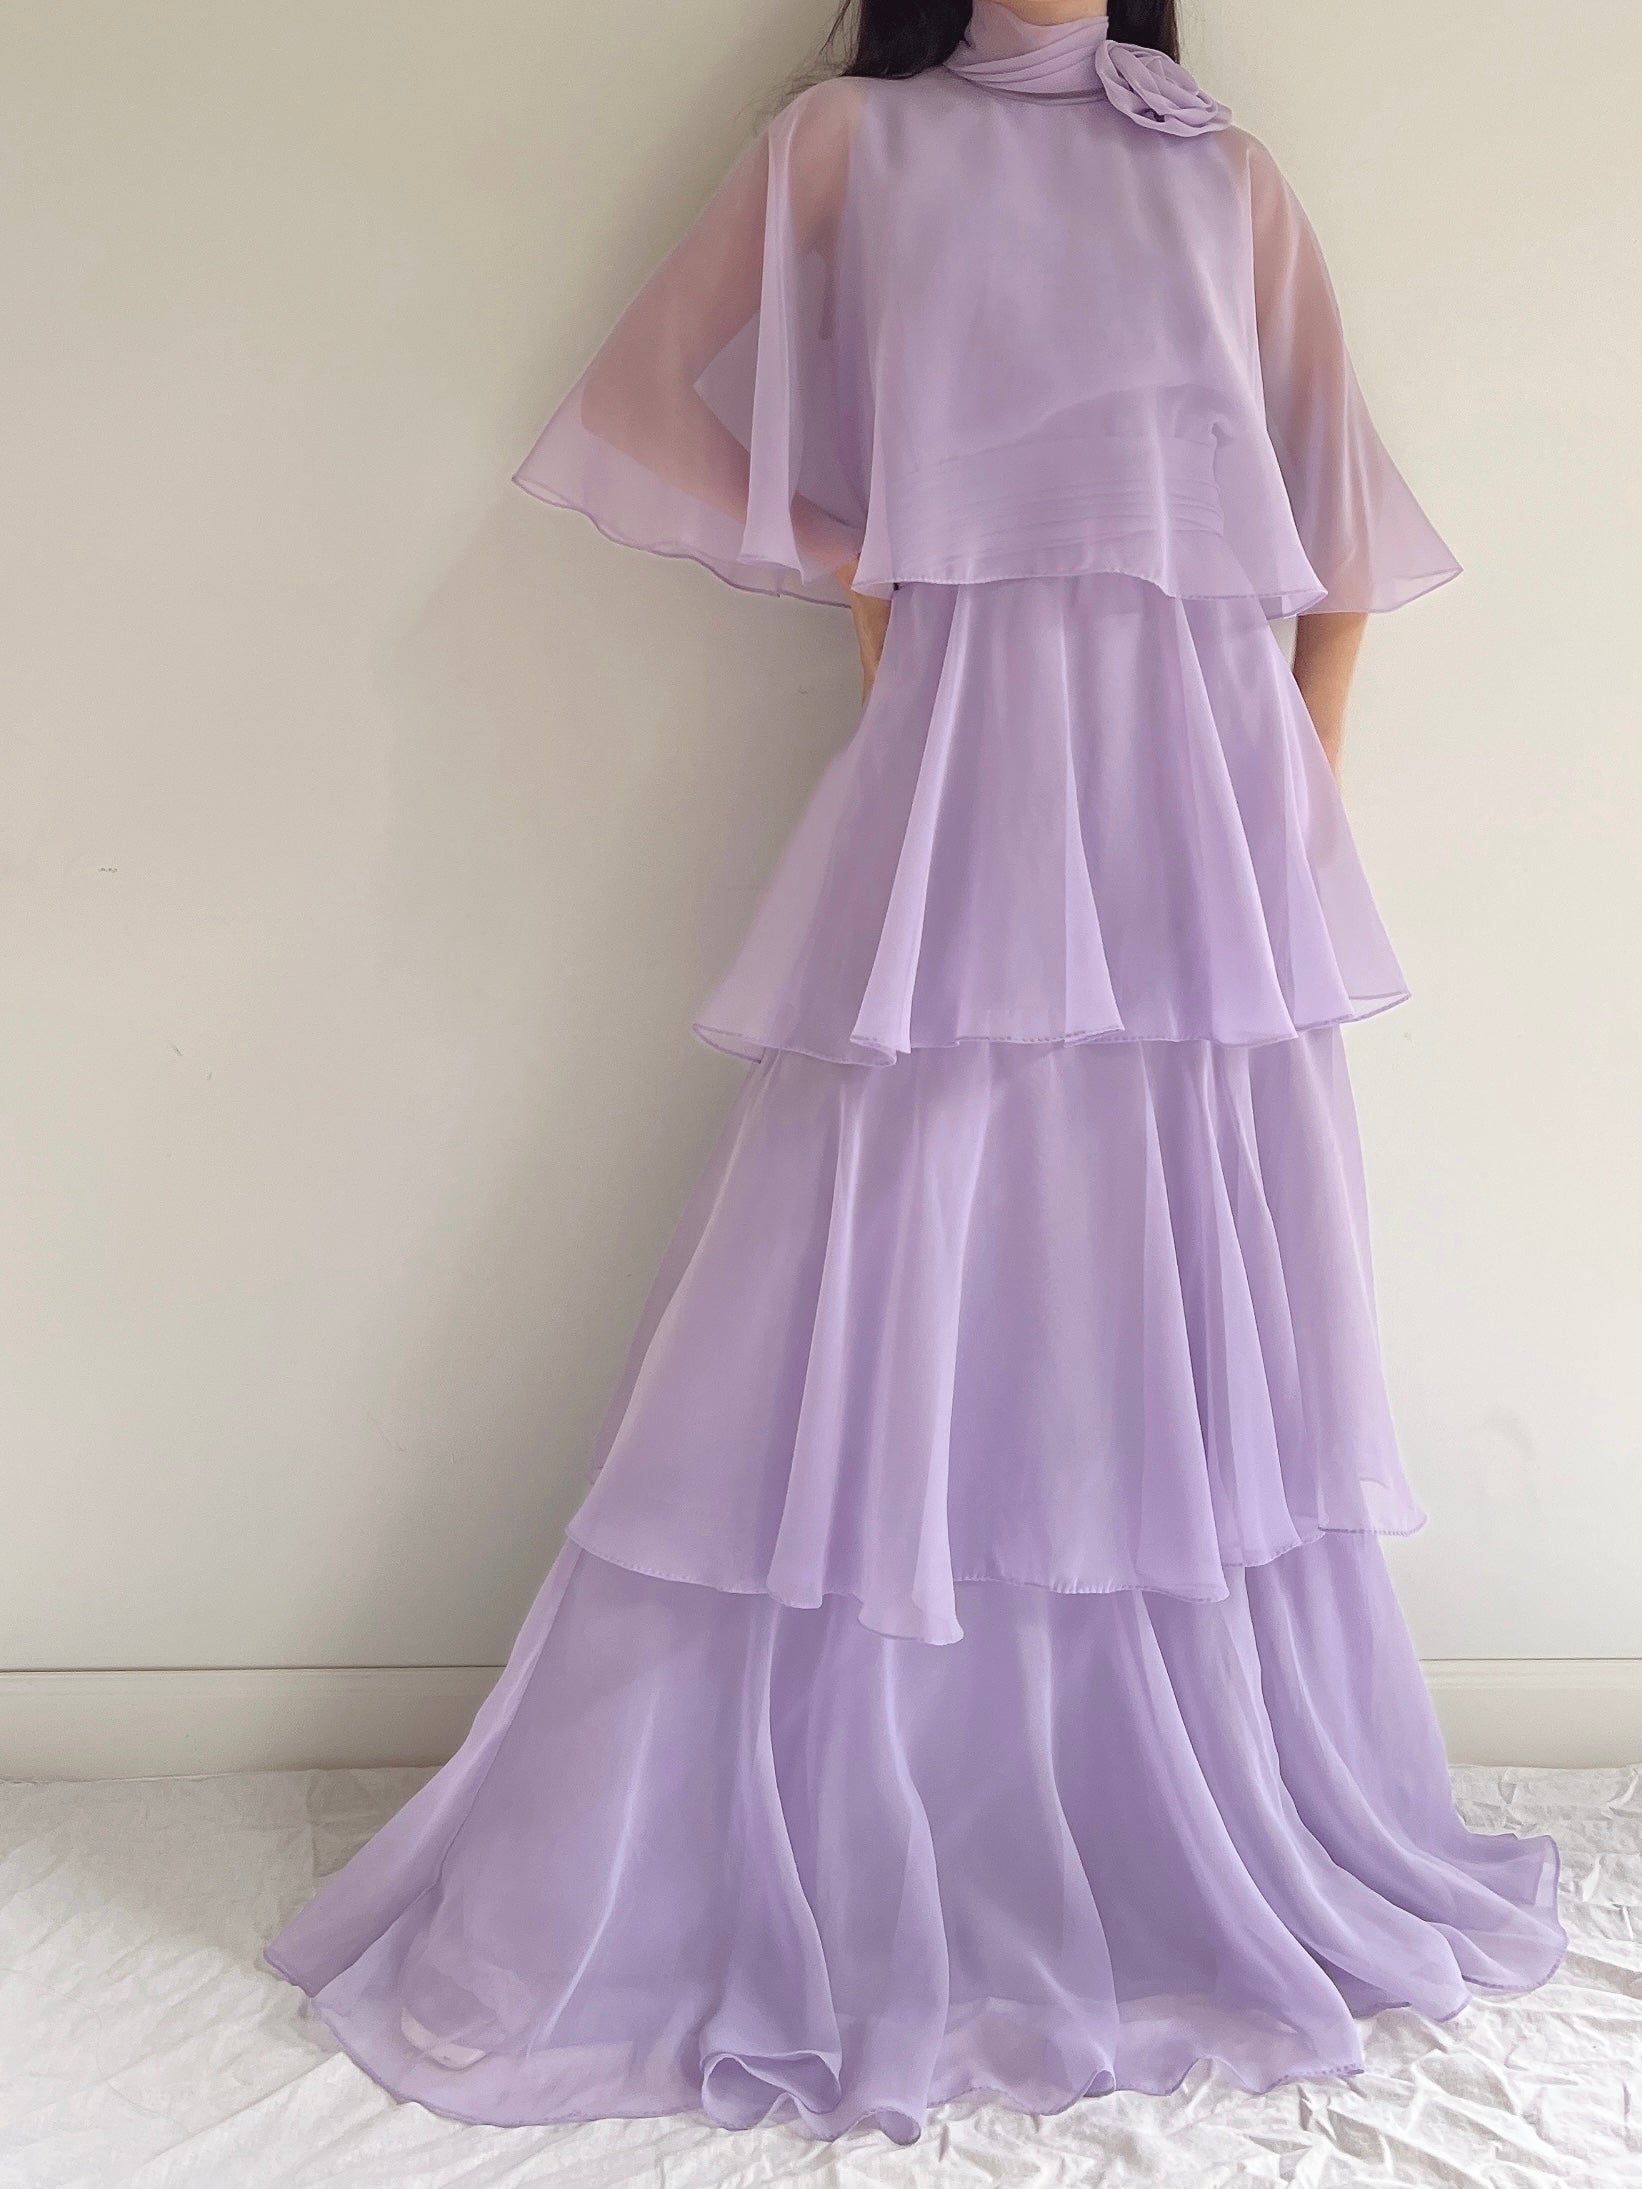 Vintage Lilac Chiffon Dress - S